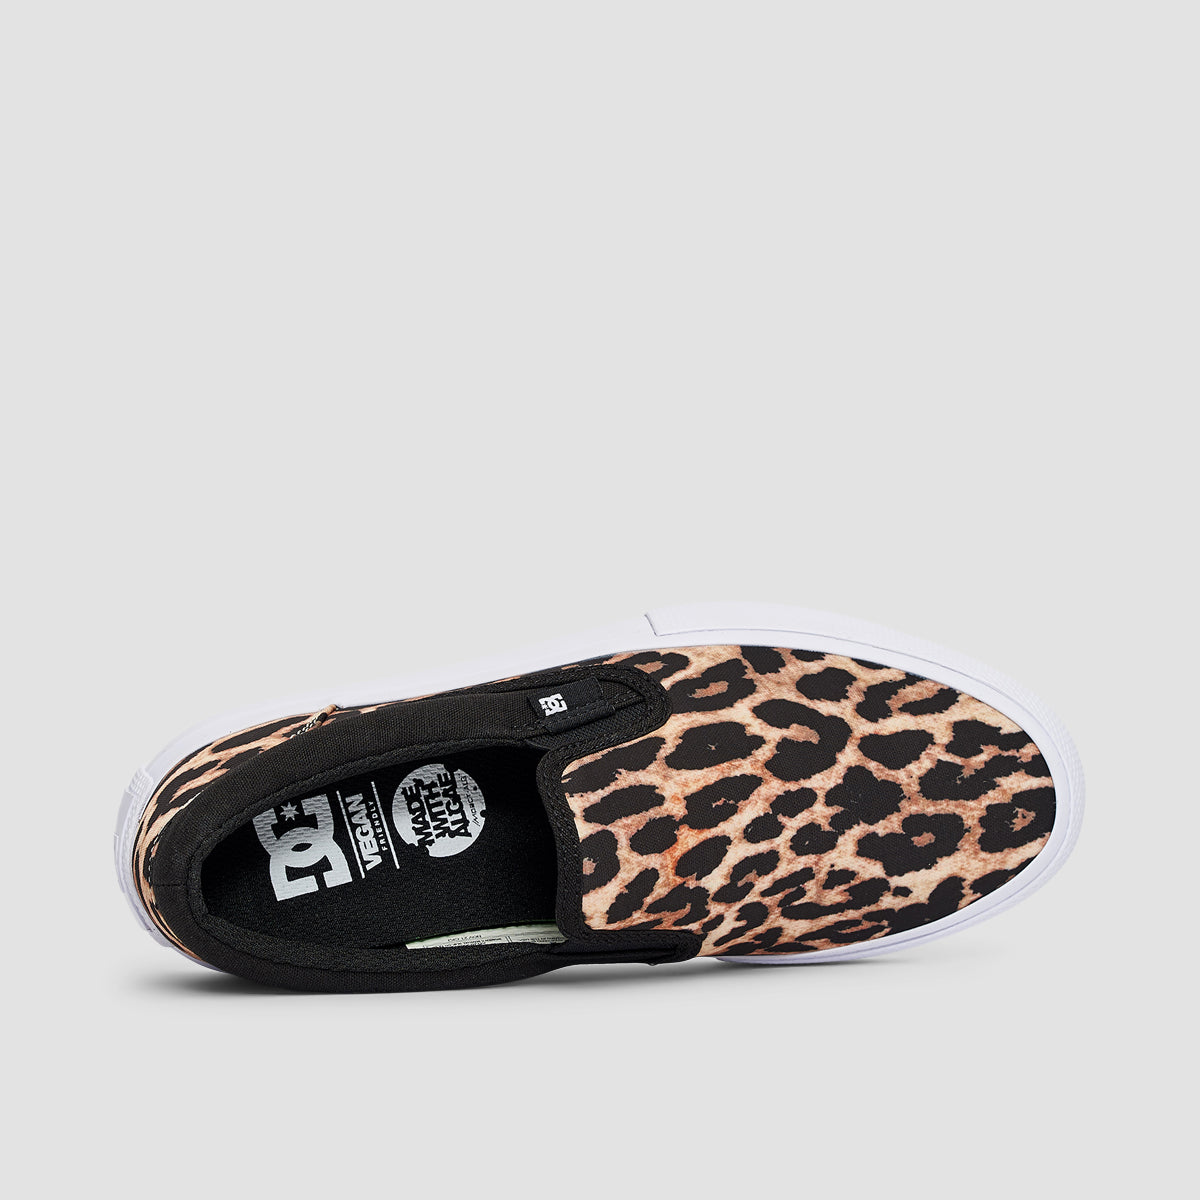 DC Manual Slip-On TXSE Shoes Black/Leopard - Womens 